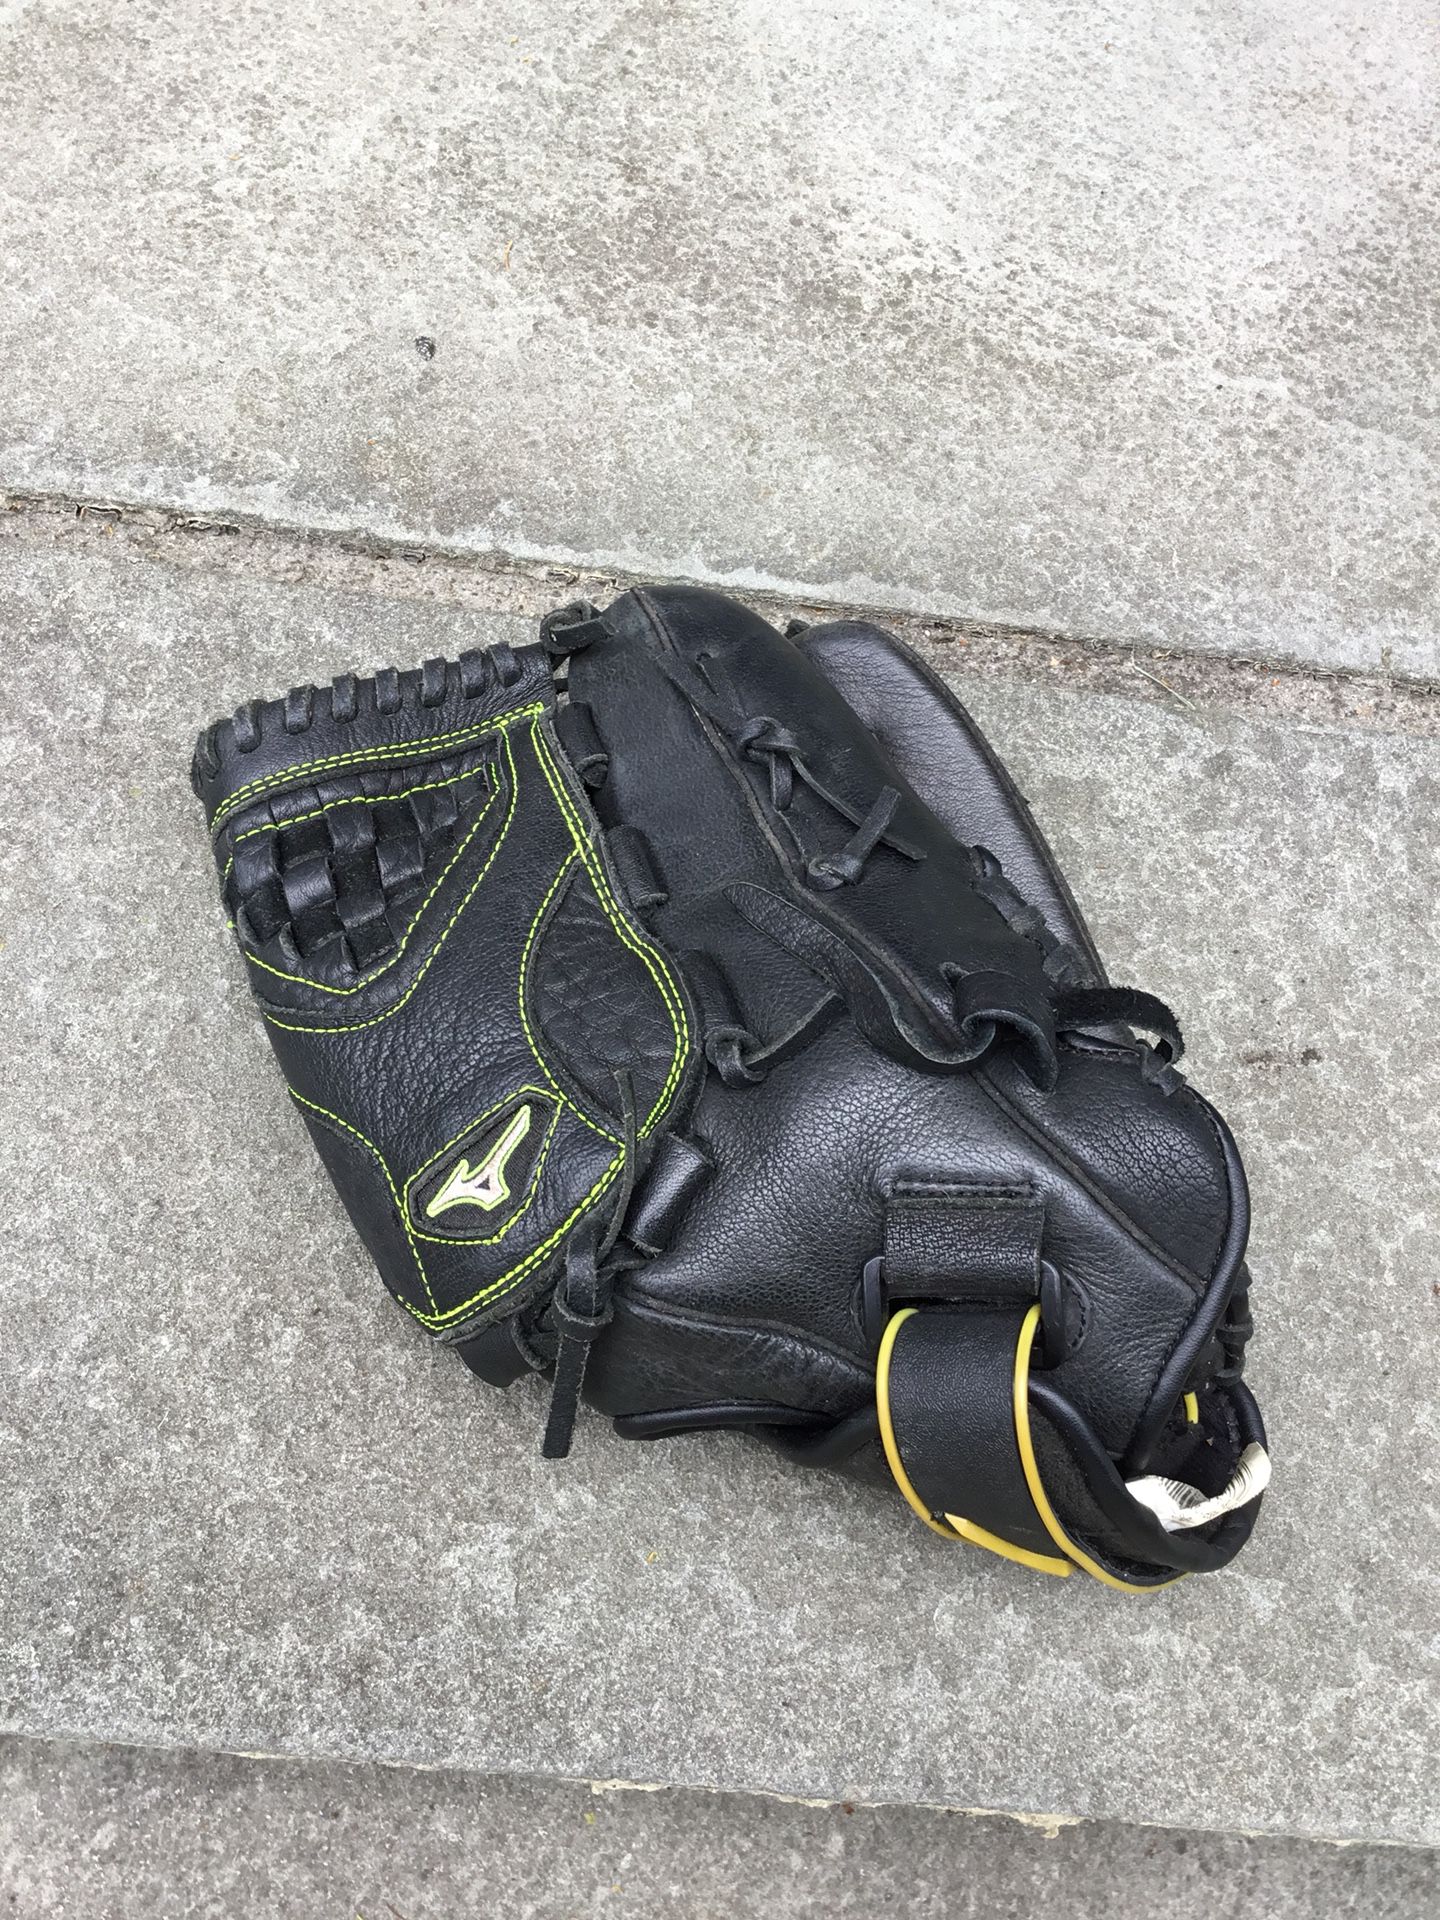 Mizuno 12-1/2 inch baseball softball glove